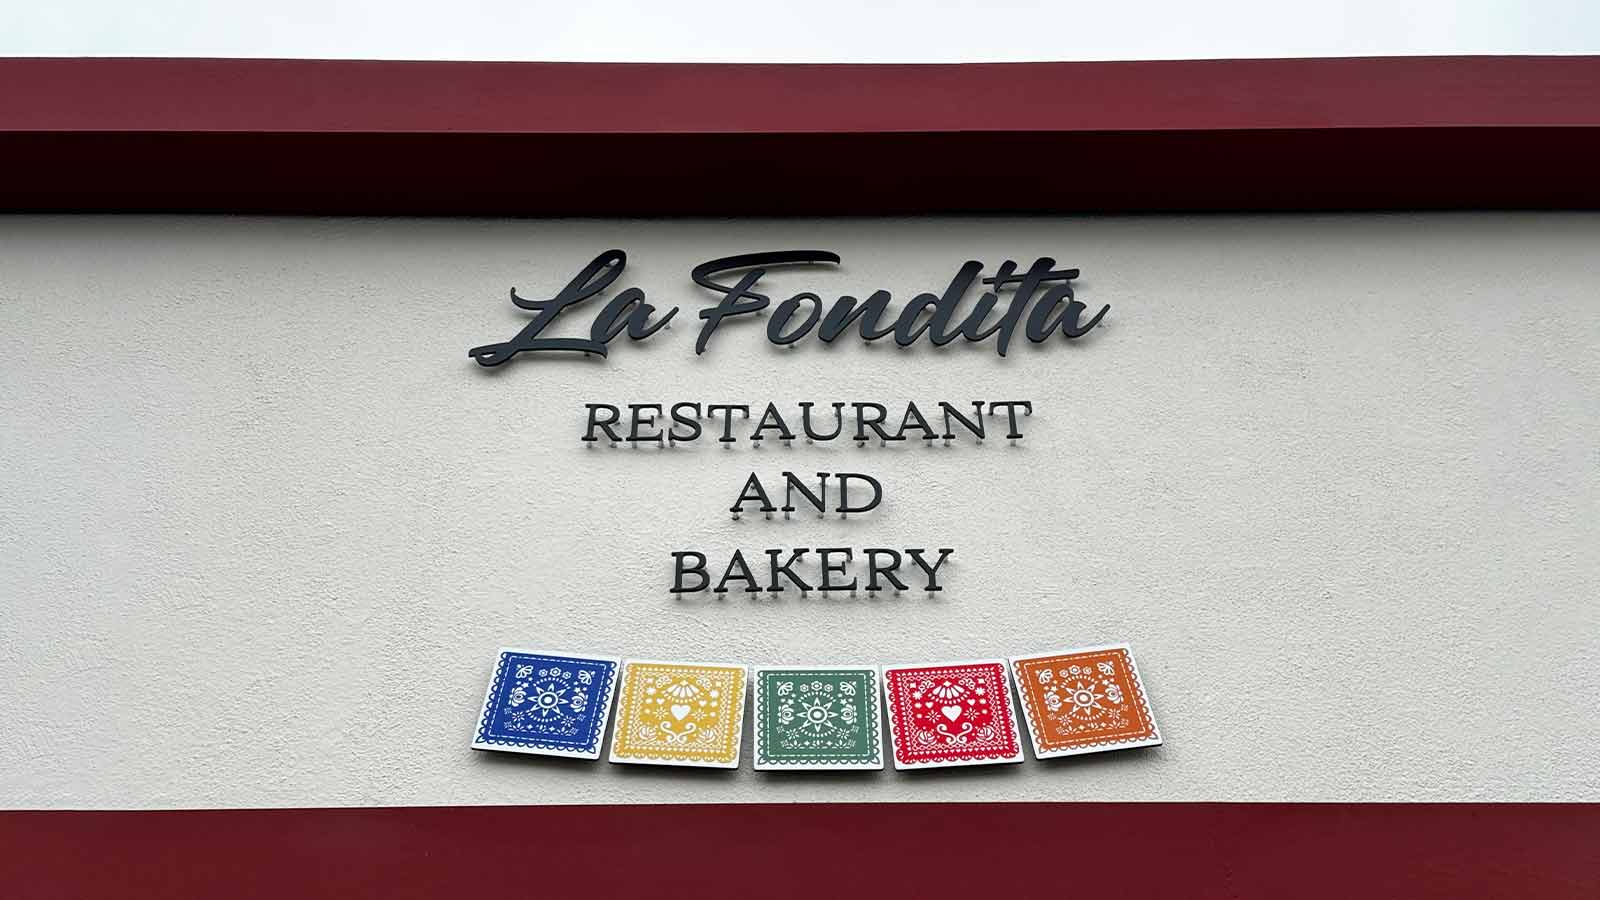 La Fondita restaurant sign mounted on the building facade